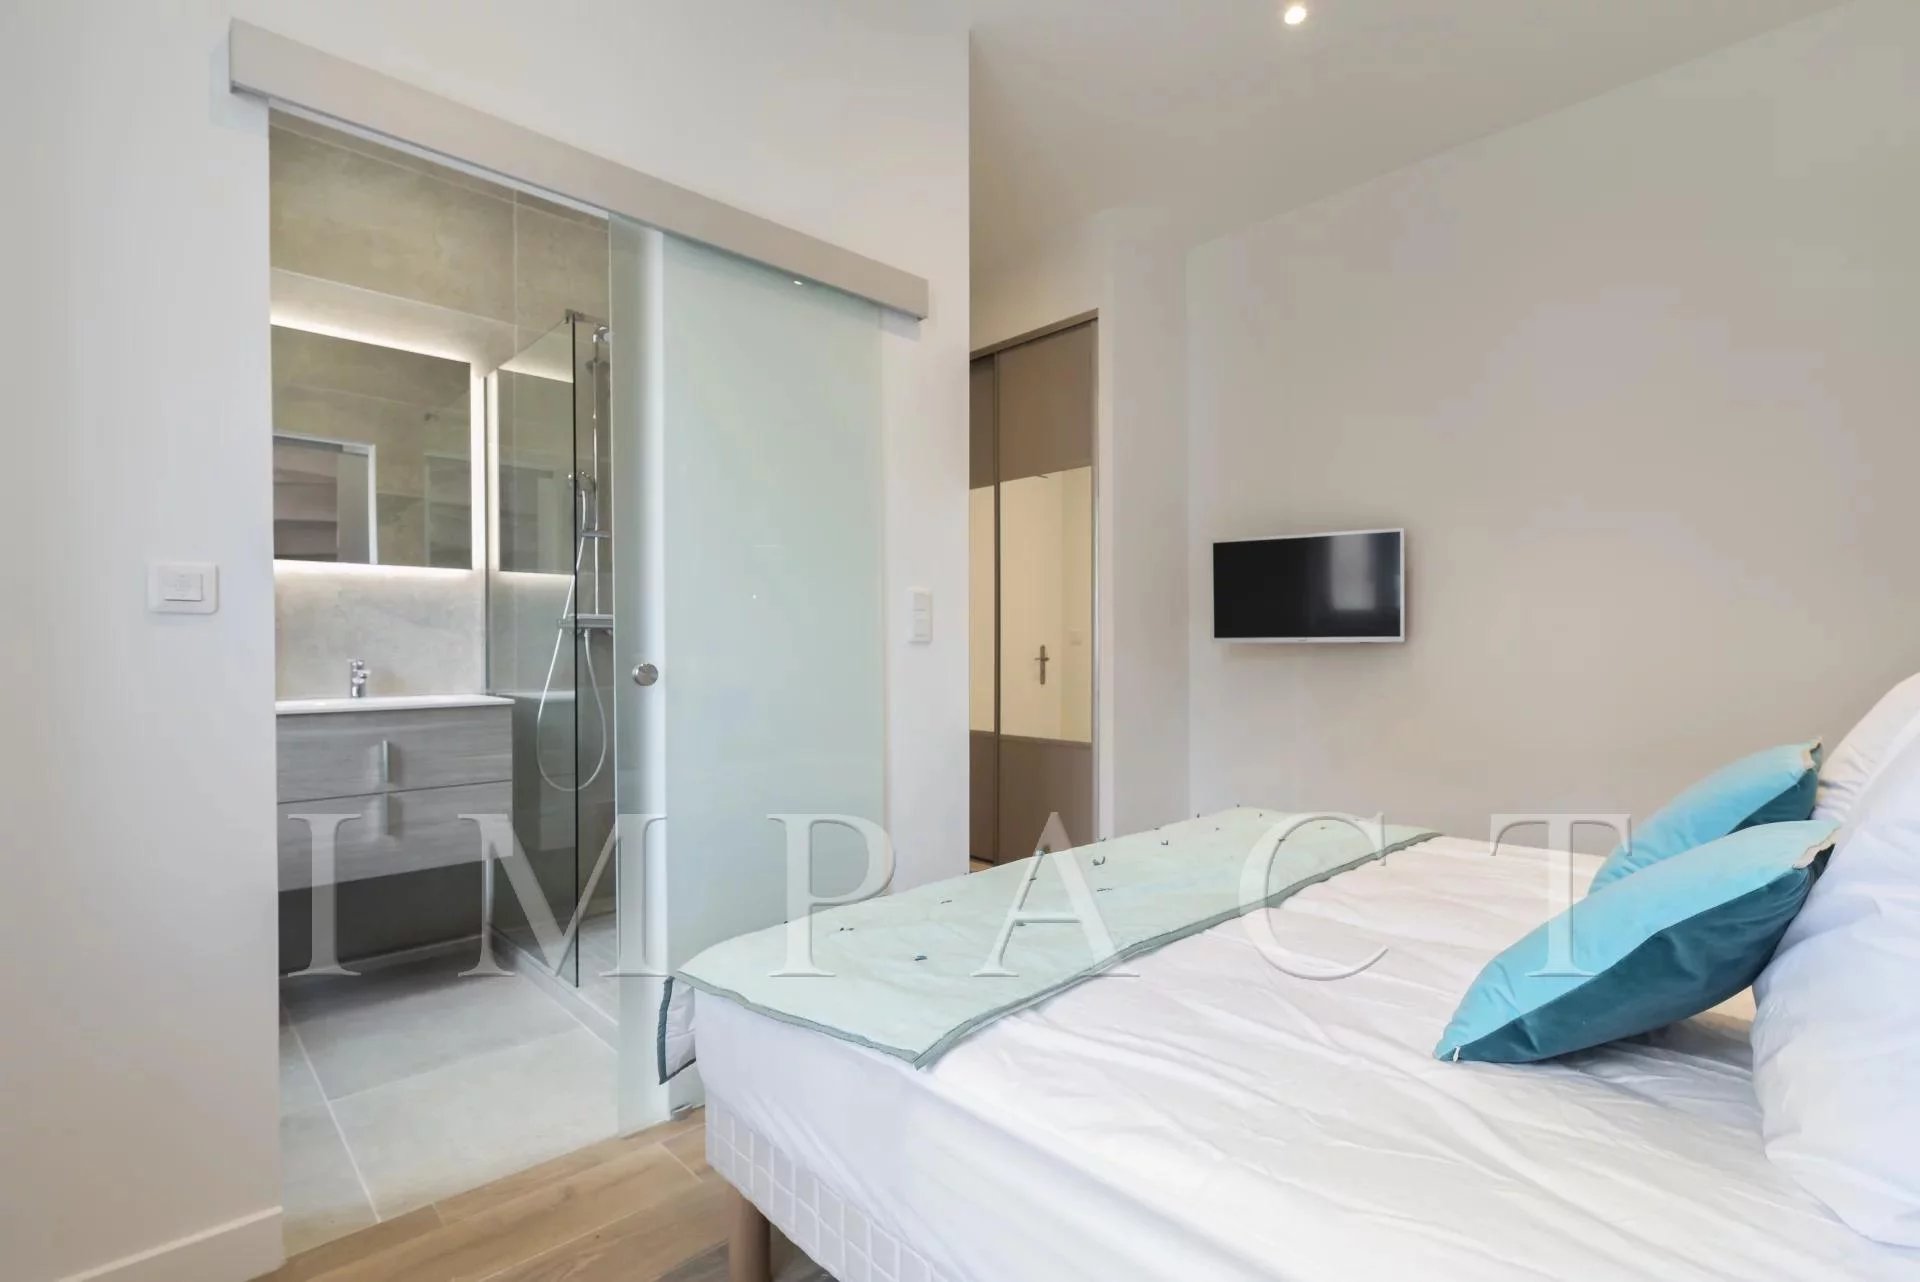 Rent 3 bedrooms apartment Cannes city centre